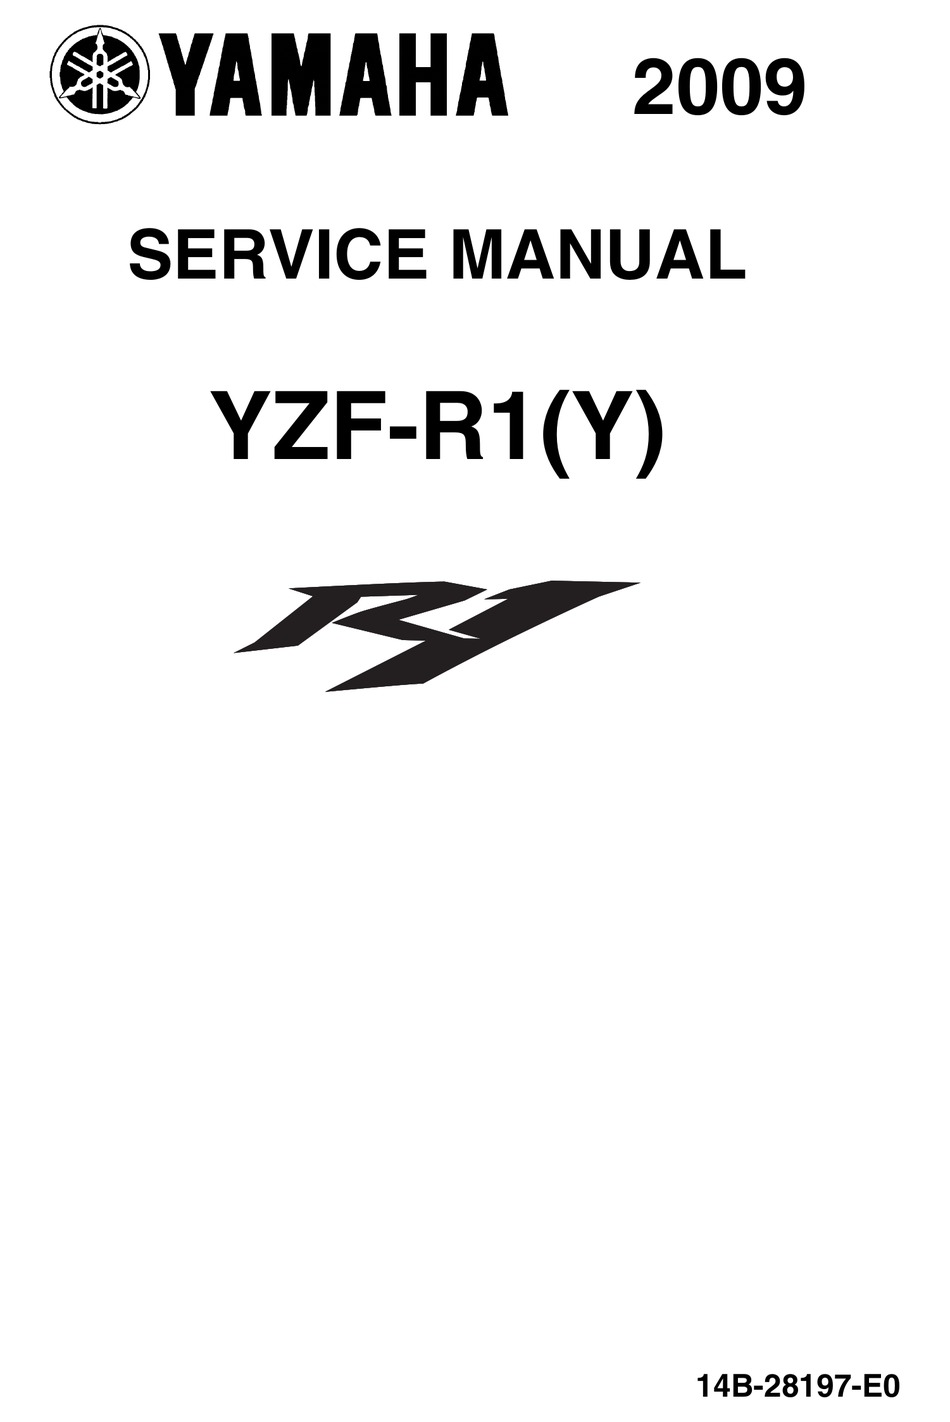 Yamaha 2009 Yzf R1 Y Service Manual Pdf Download Manualslib